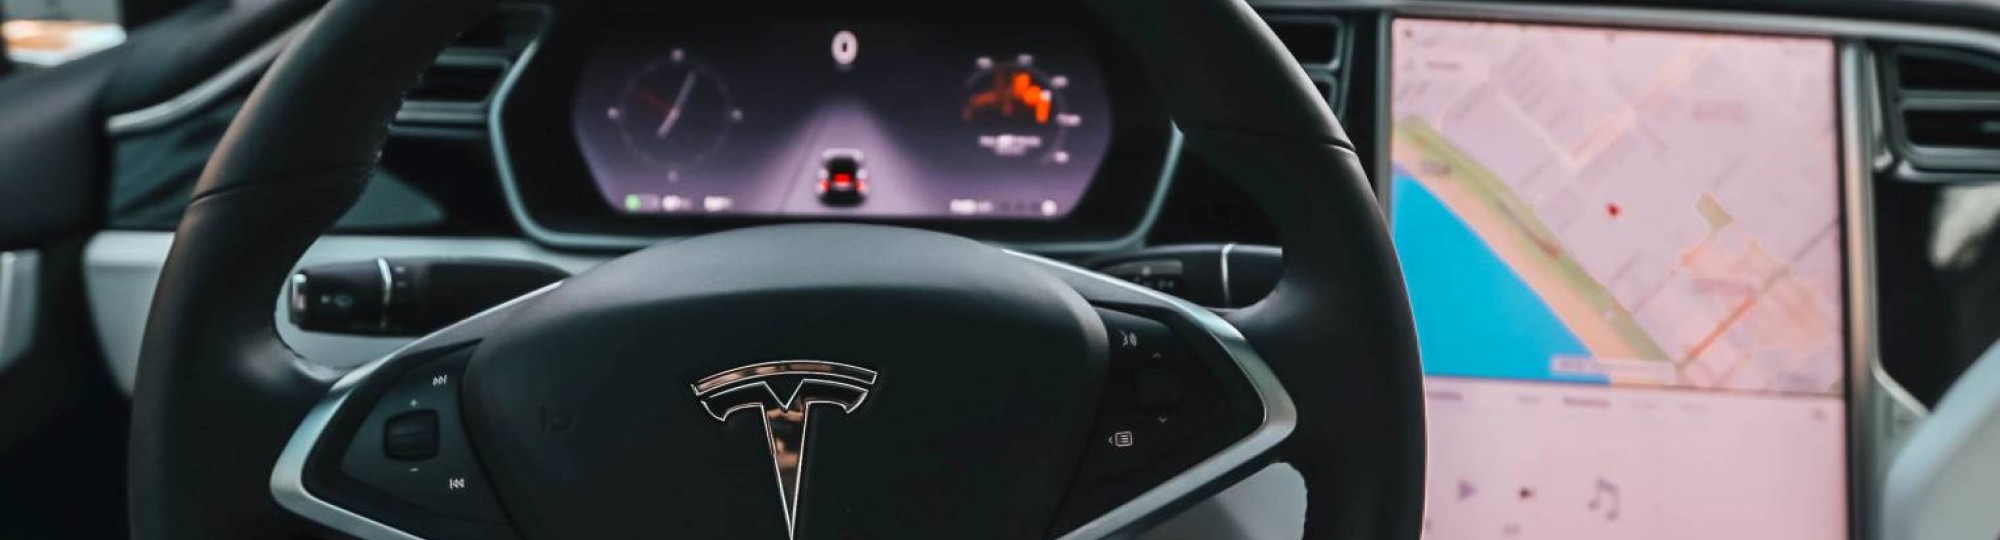 Tesla dashboard autonome navigatie